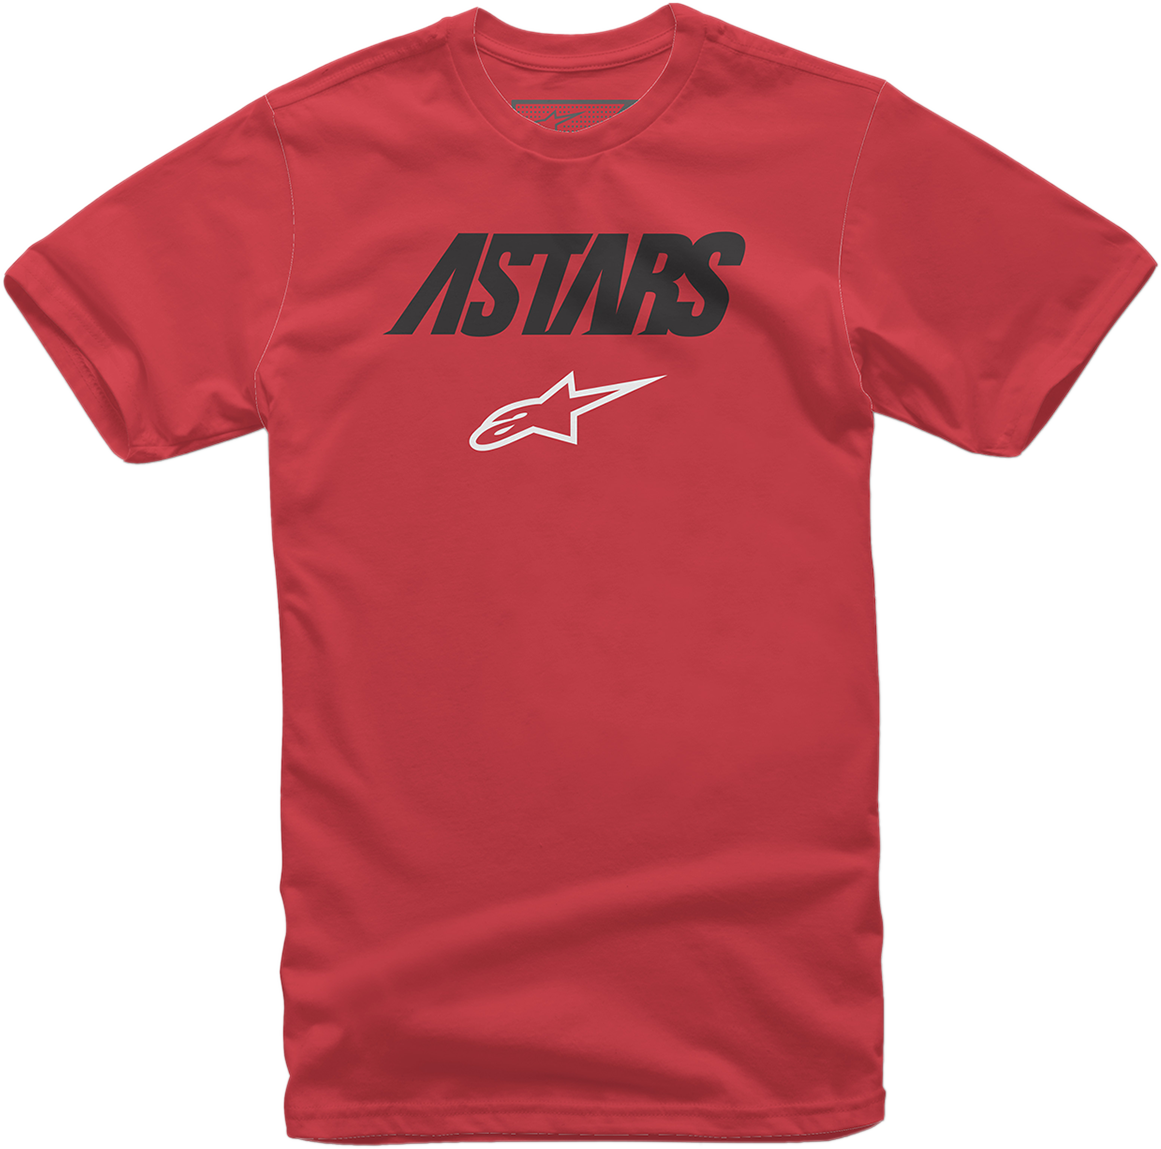 ALPINESTARS Angle Combo T-Shirt - Red - Large 11197200030L